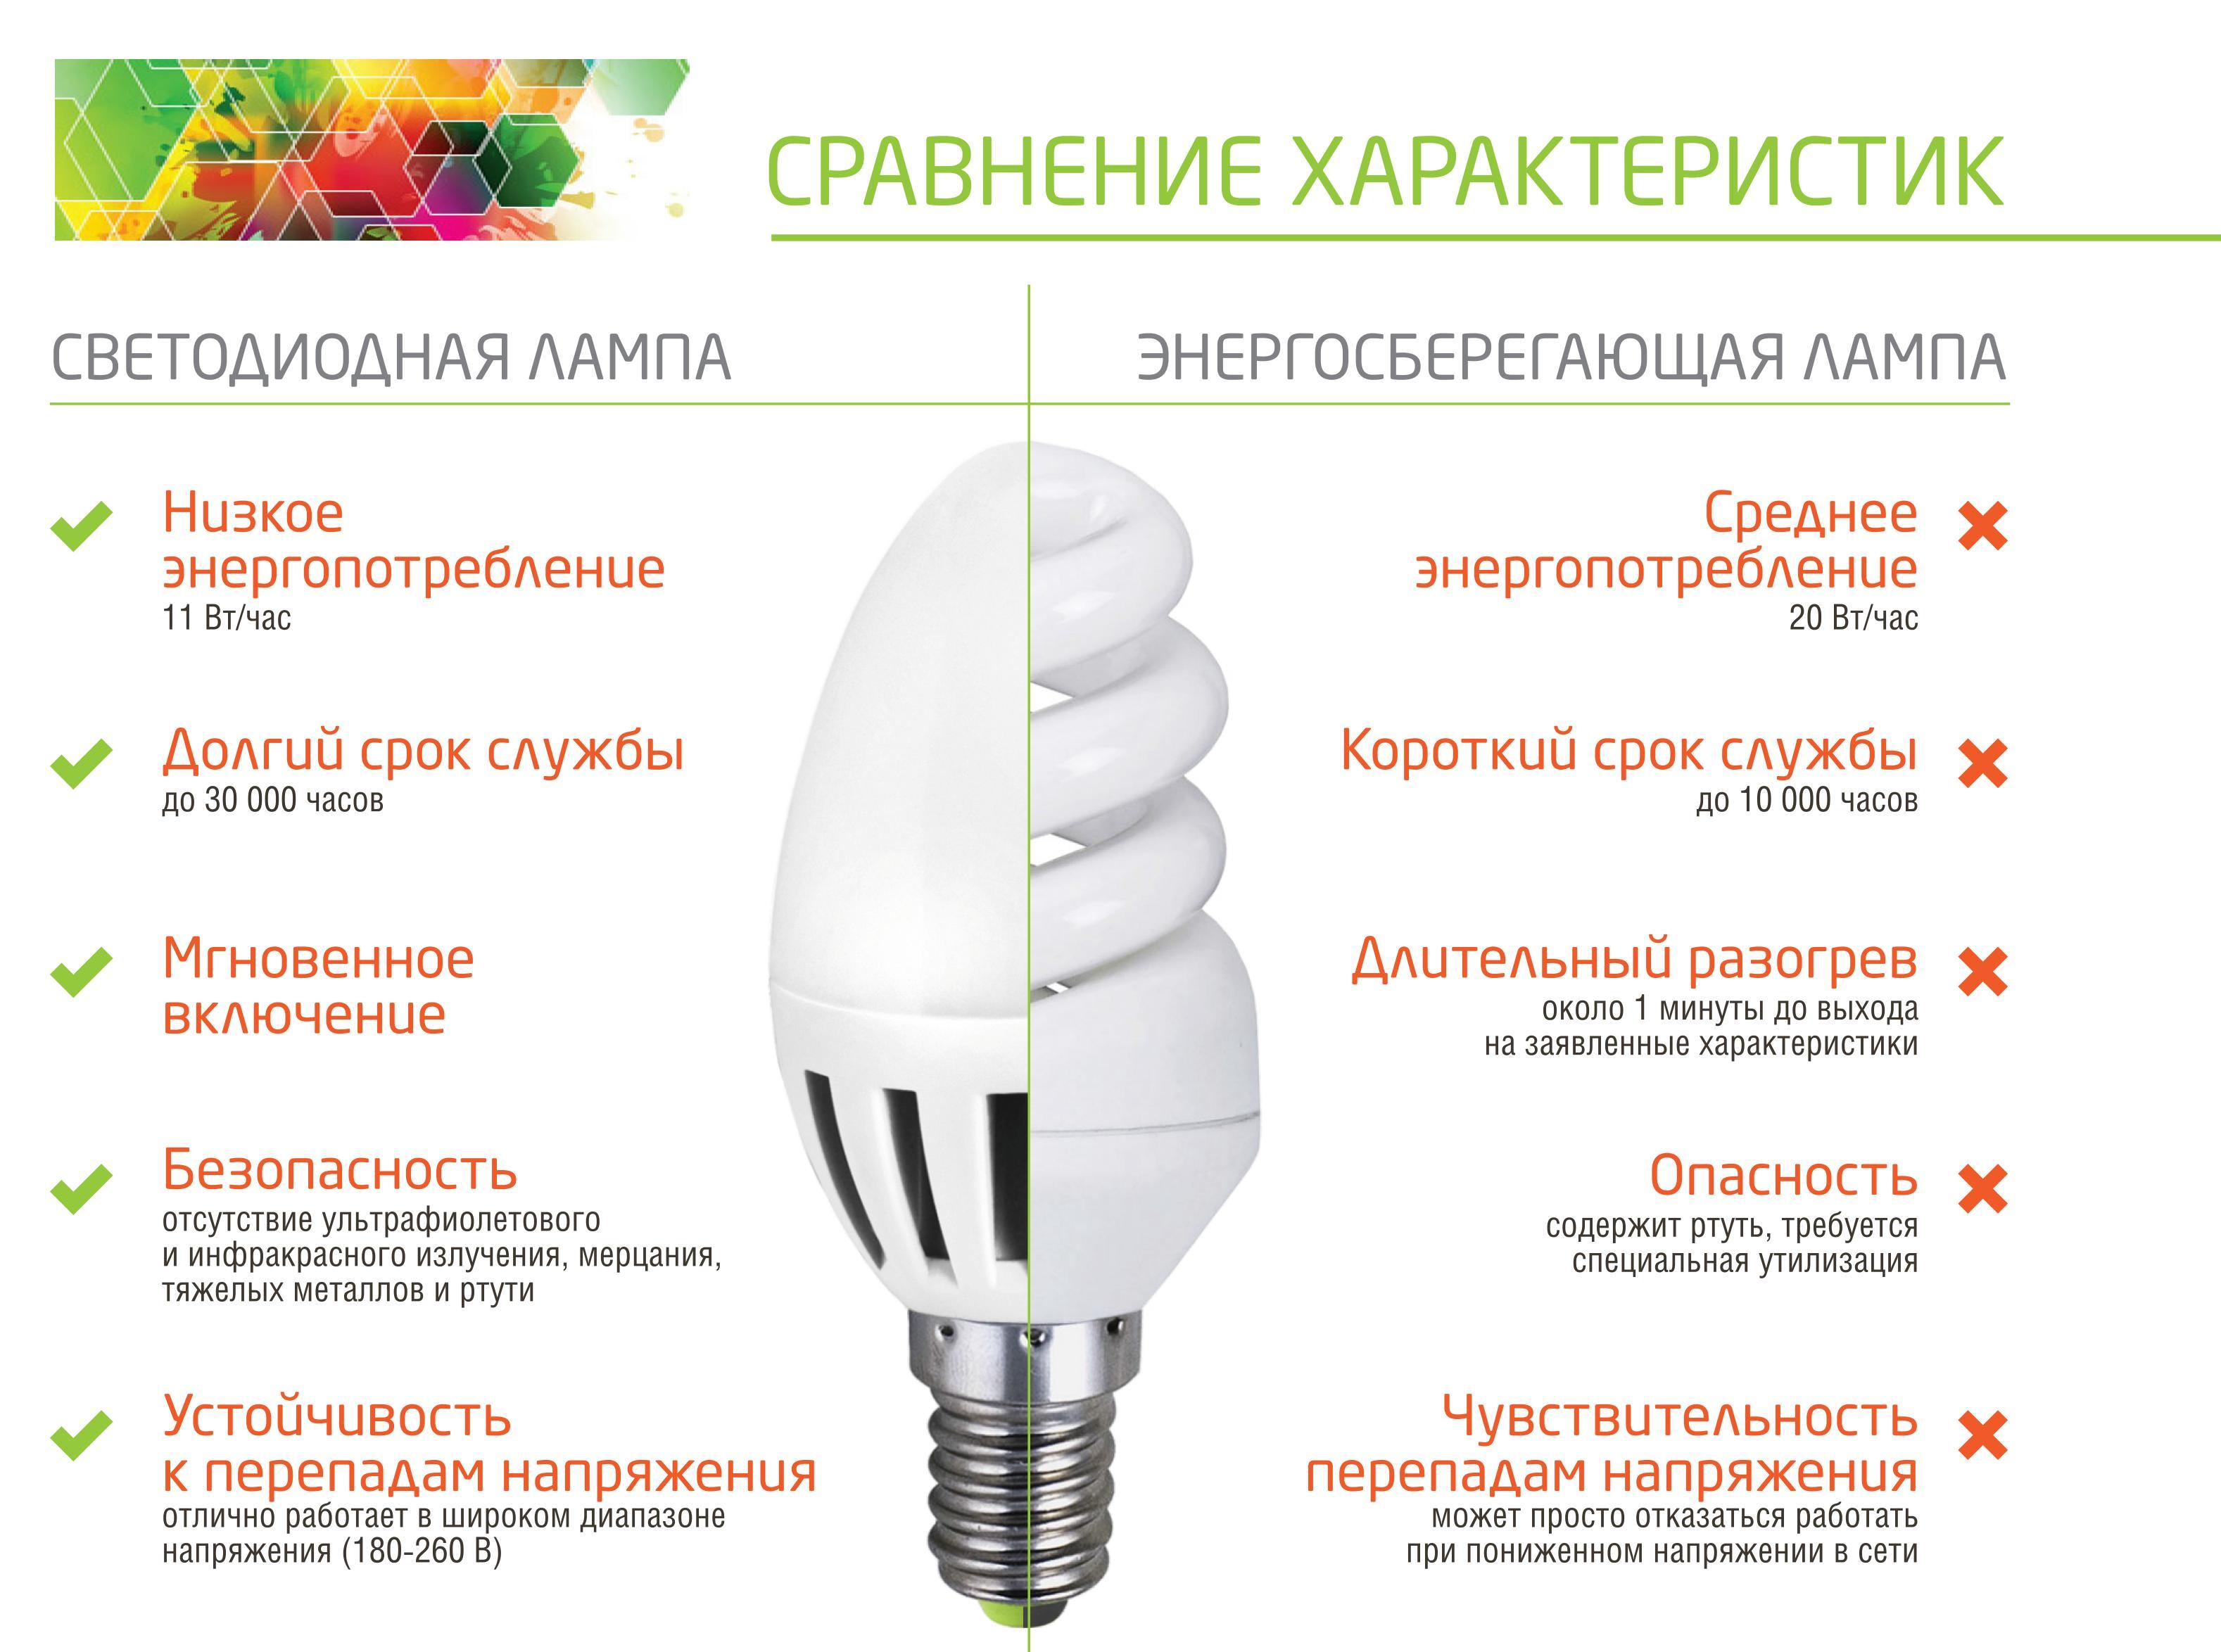 Преимущества использования LED ламп